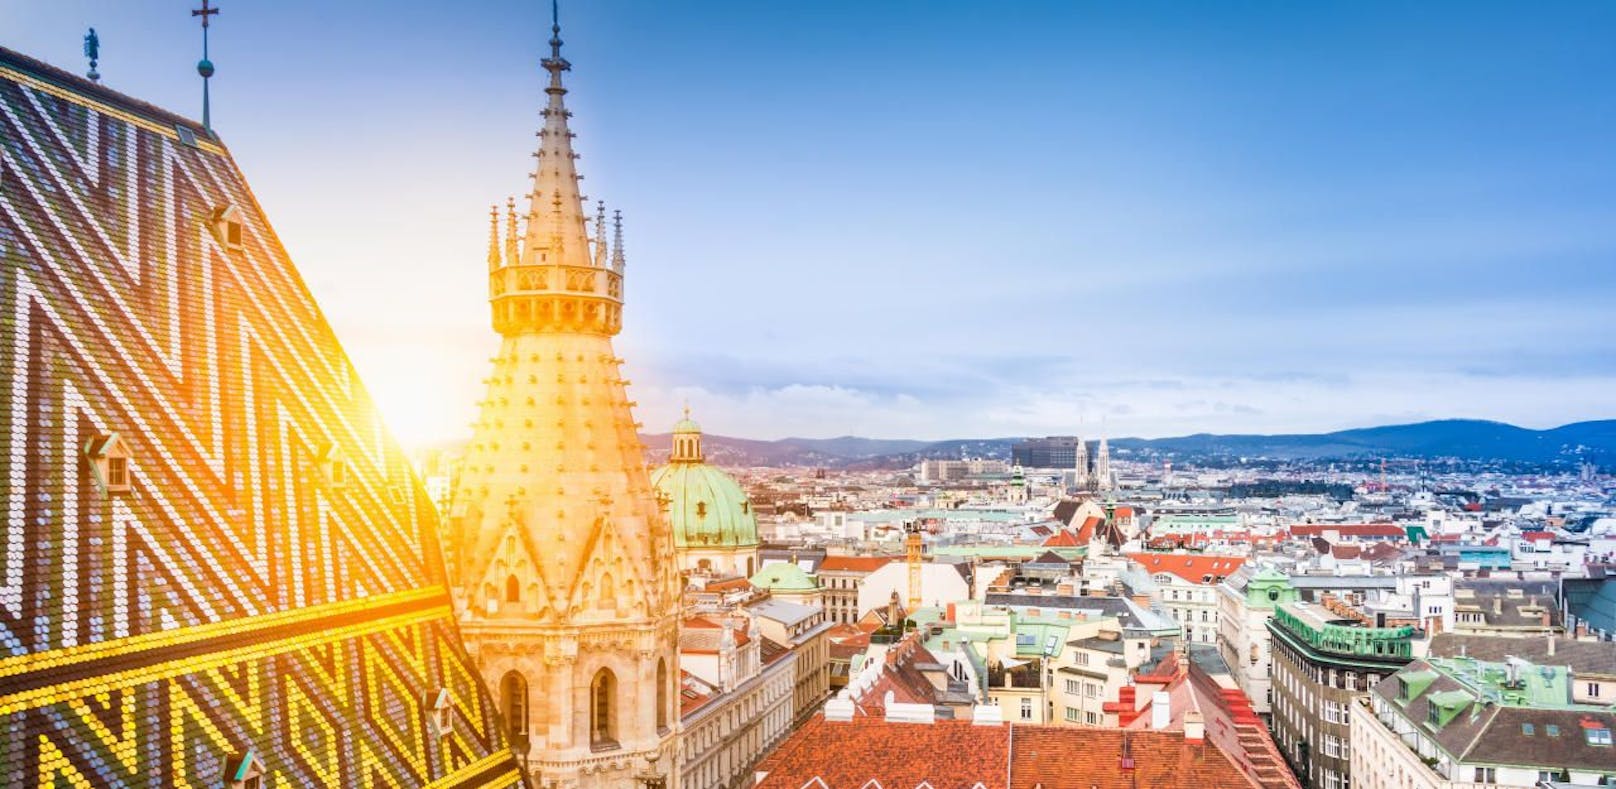 Wien: Was wird in den Wiener Hotels gerne gestohlen?